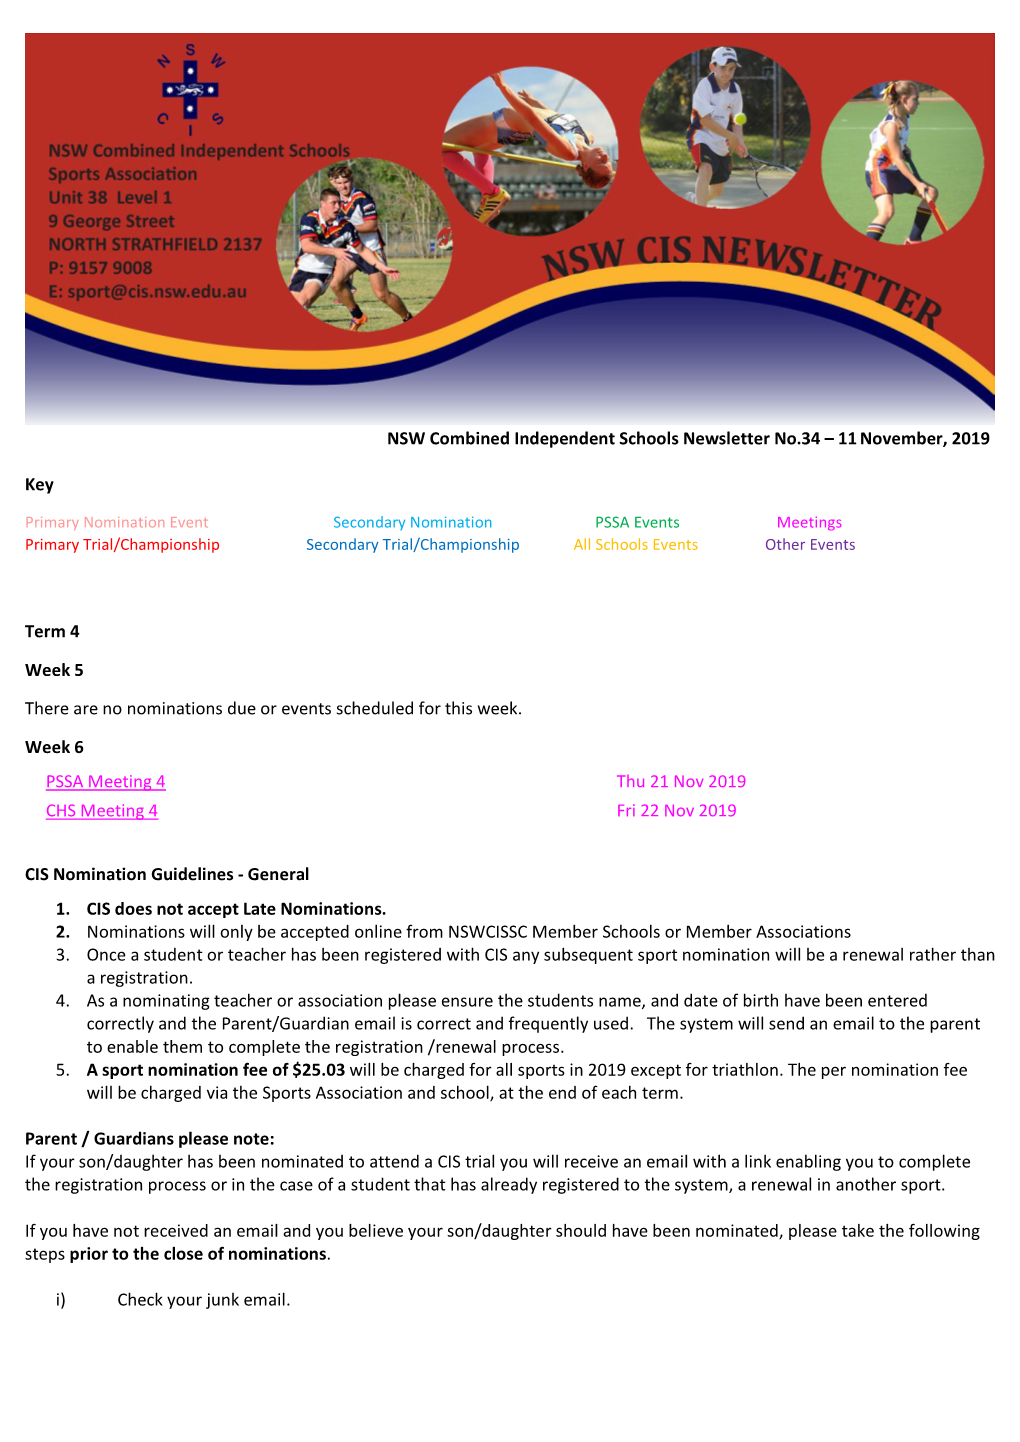 NSW Combined Independent Schools Newsletter No.34 – 11November